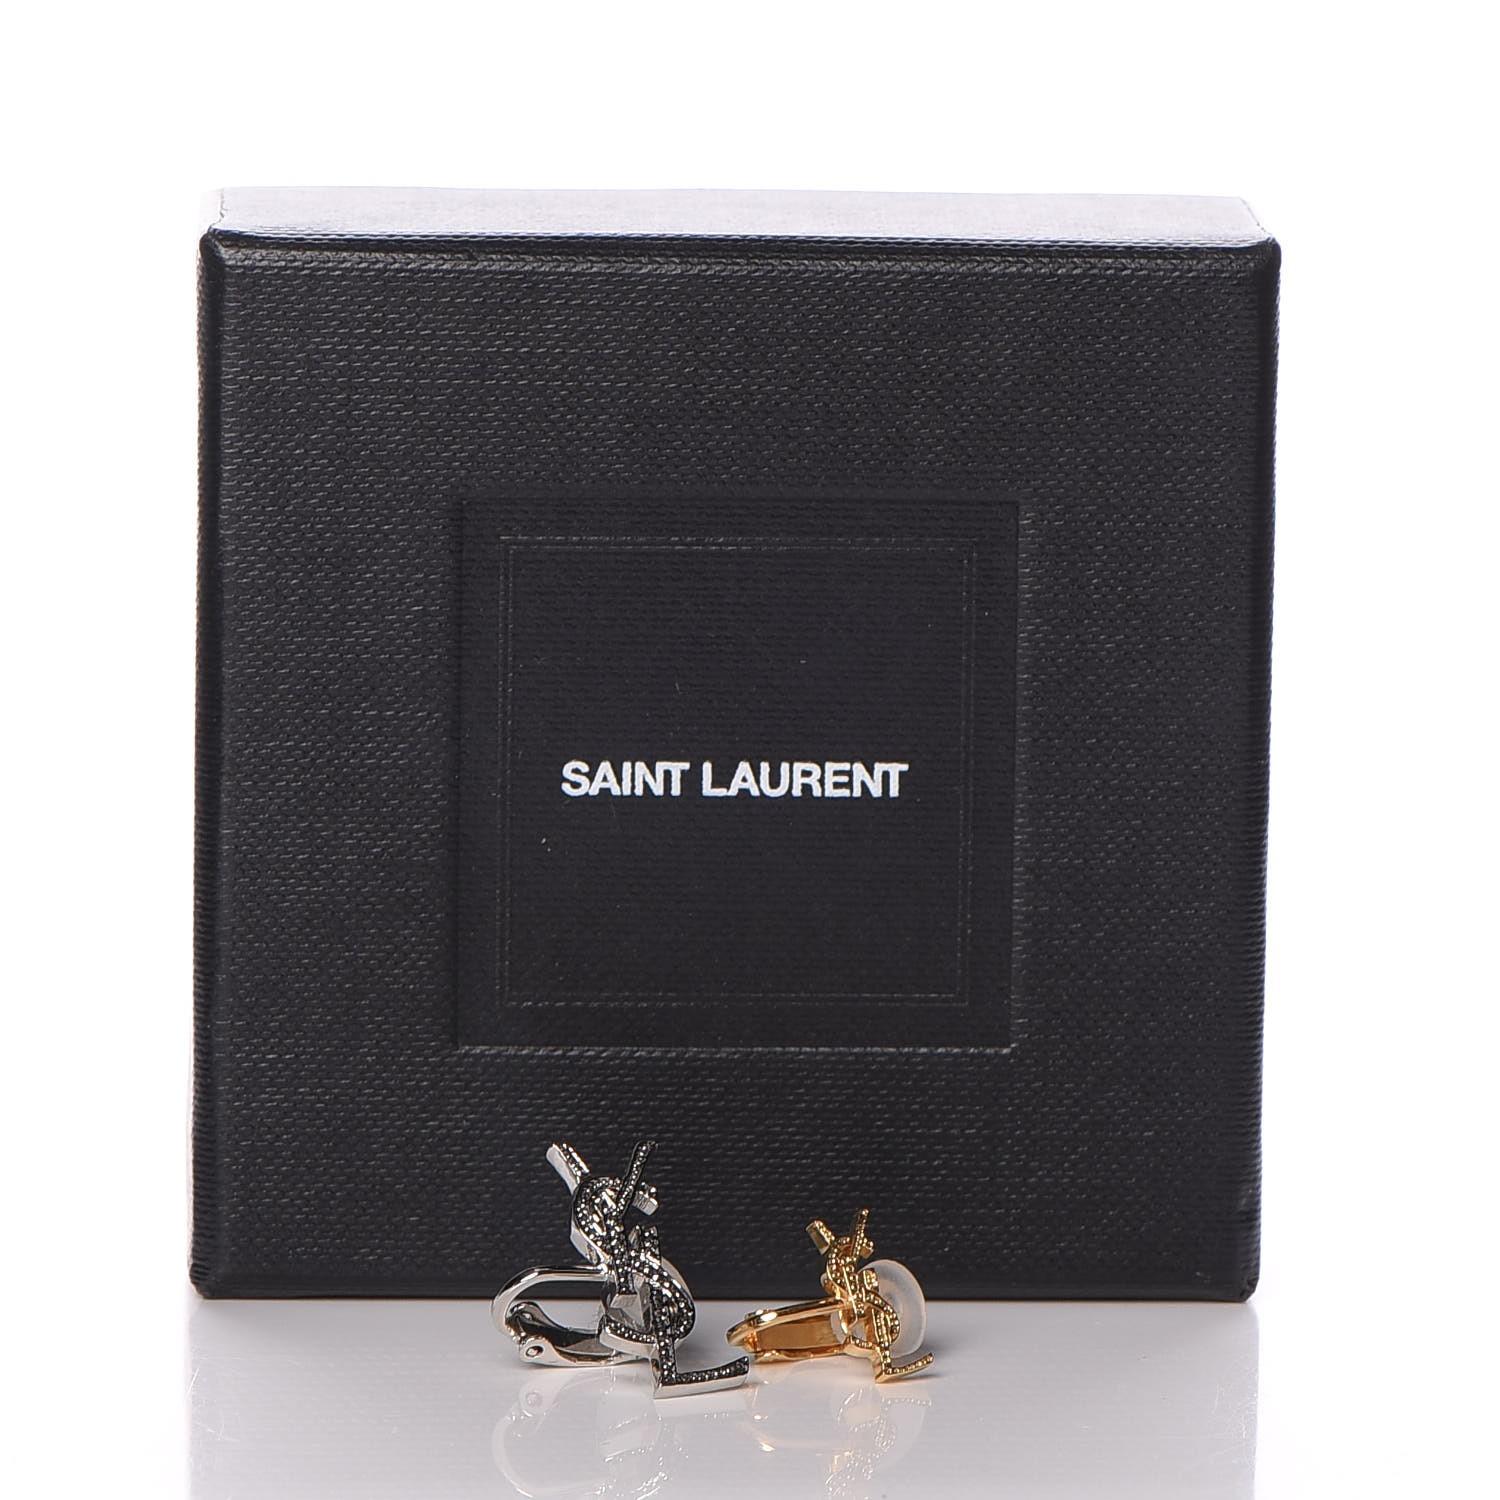 SAINT LAURENT Crystal YSL Ear Cuff Earring Set Gold Silver 268121